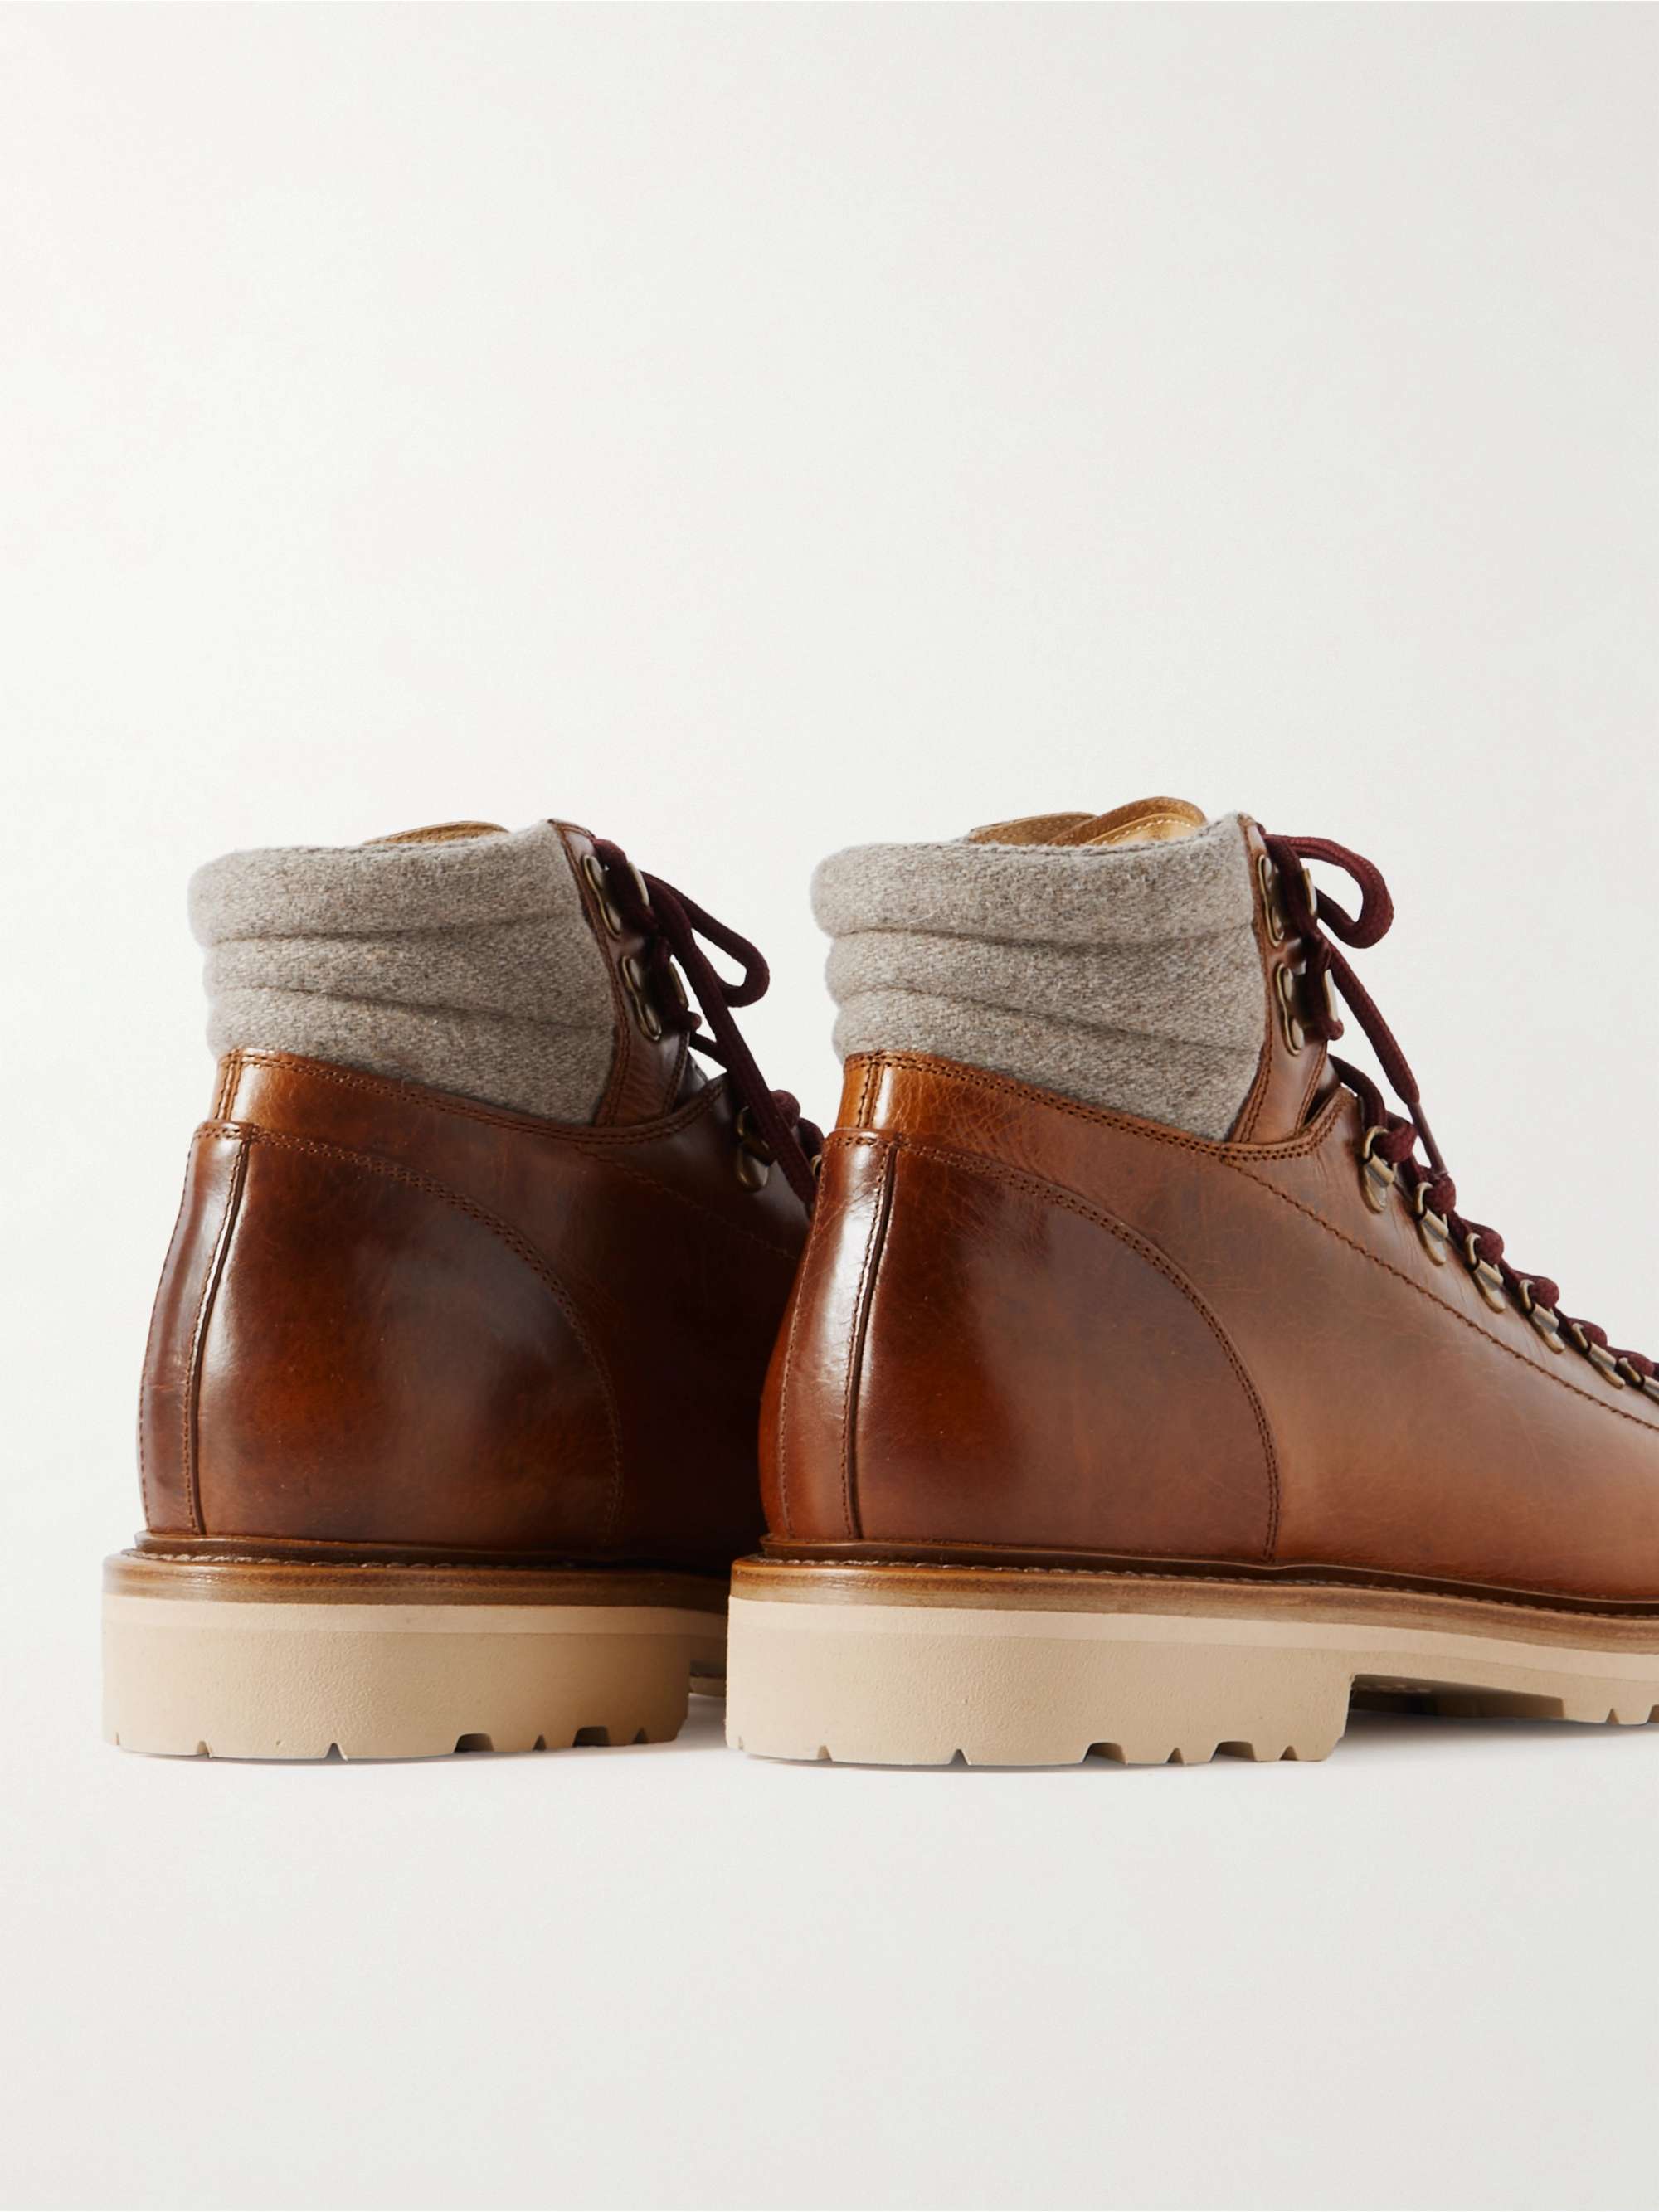 BRUNELLO CUCINELLI Cashmere-Trimmed Leather Hiking Boots for Men | MR PORTER